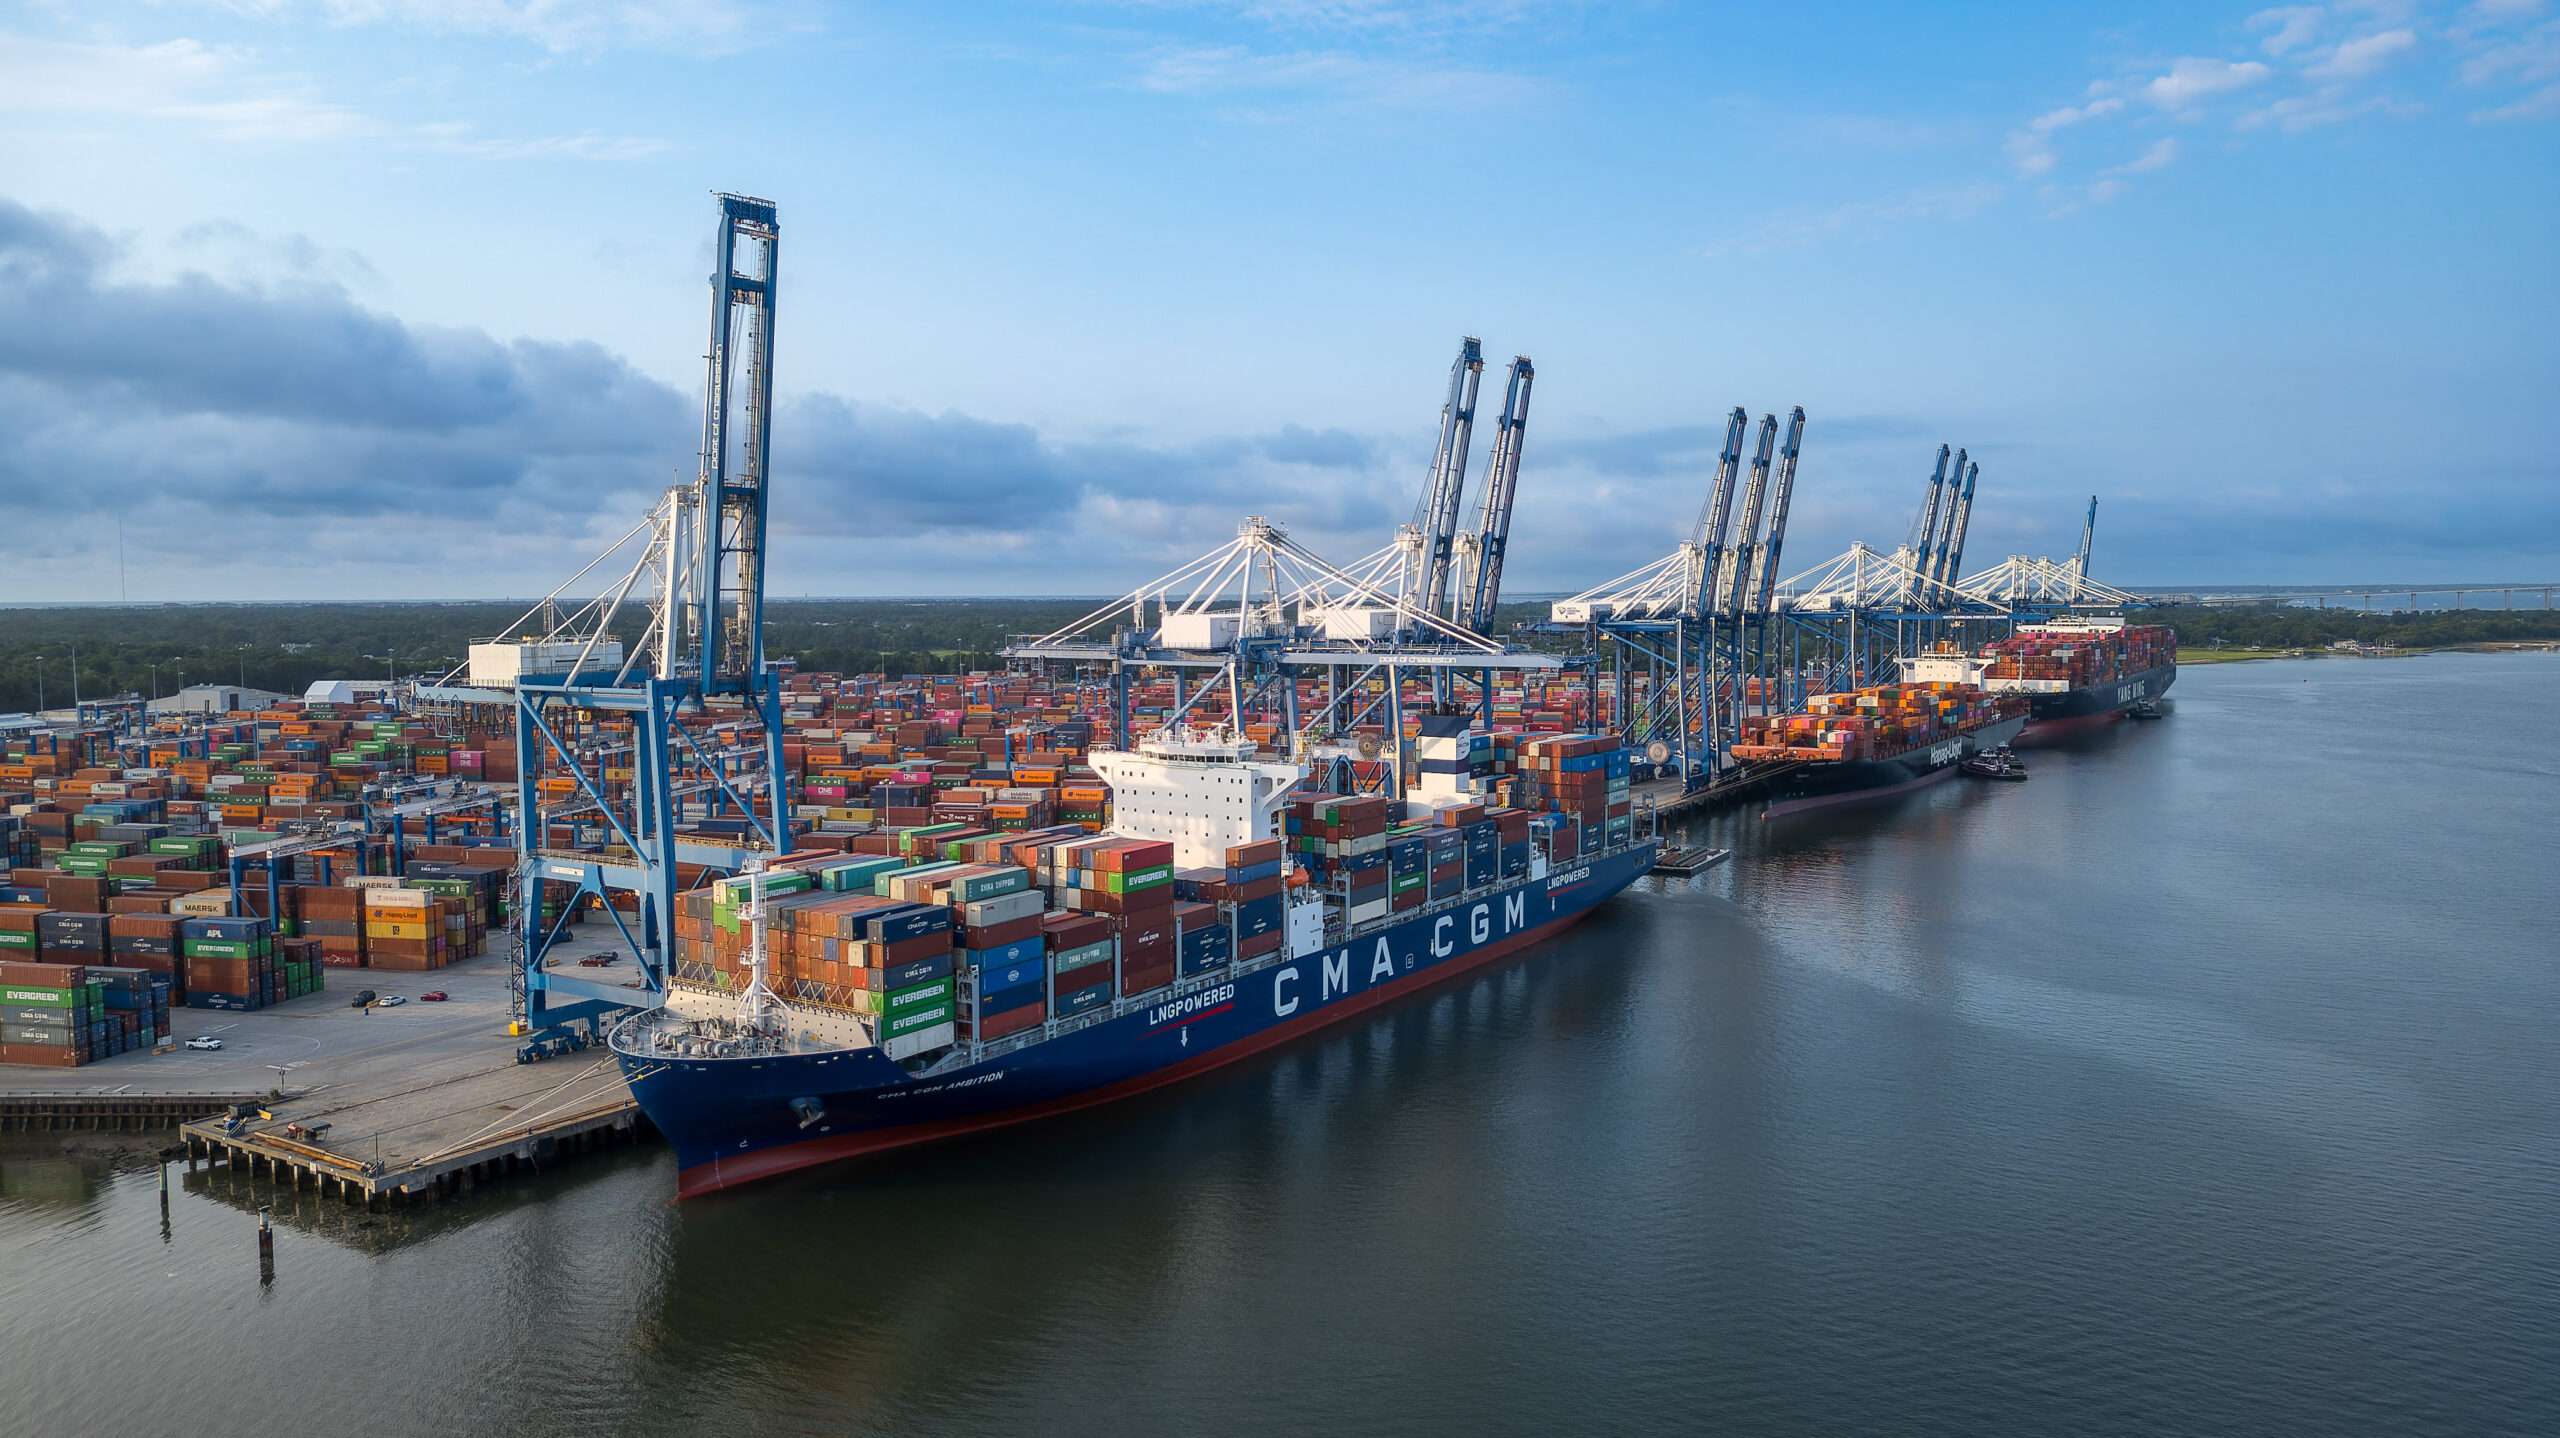 South Carolina Ports Works to Reduce Vessel Delays